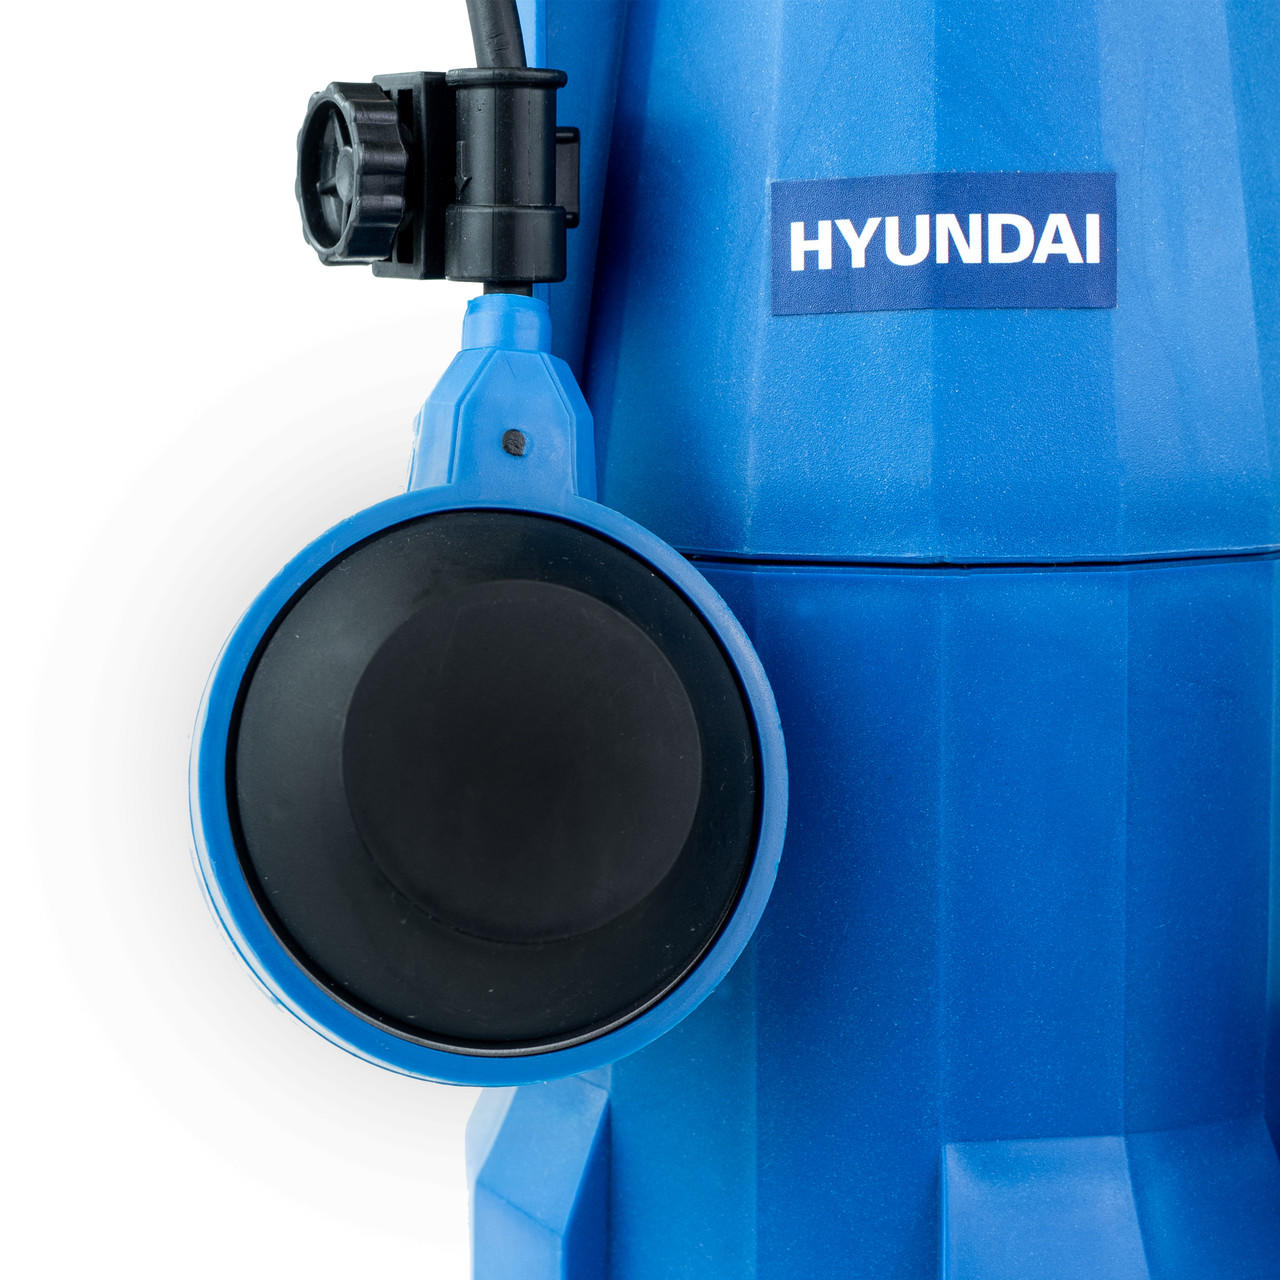 Hyundai HYSP1100CD Electric Submersible Water Pump - 1100W